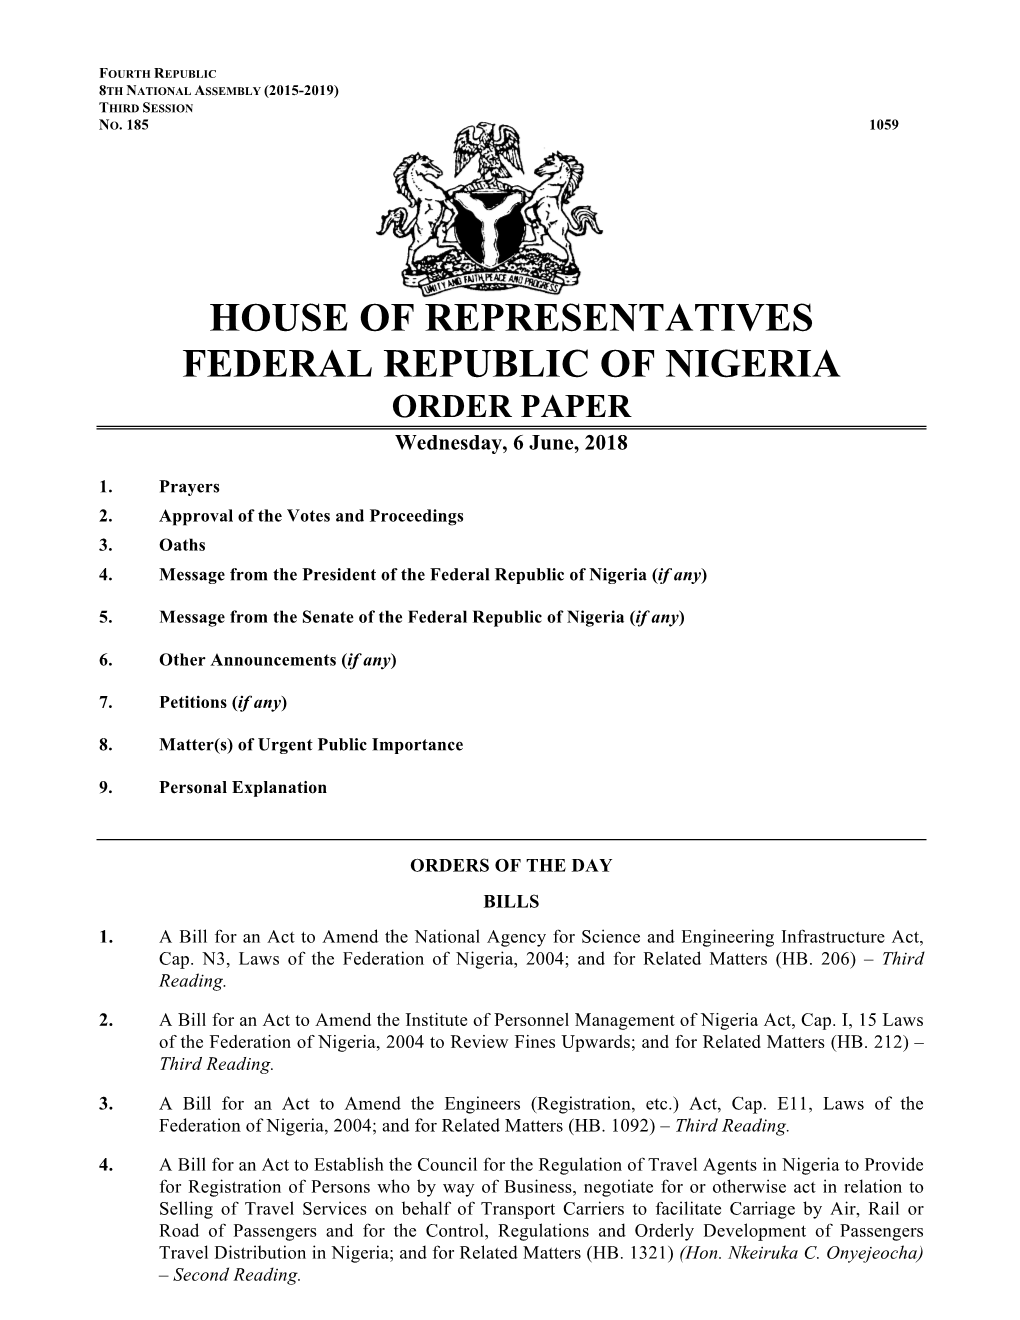 HOUSE of REPRESENTATIVES FEDERAL REPUBLIC of NIGERIA ORDER PAPER Wednesday, 6 June, 2018